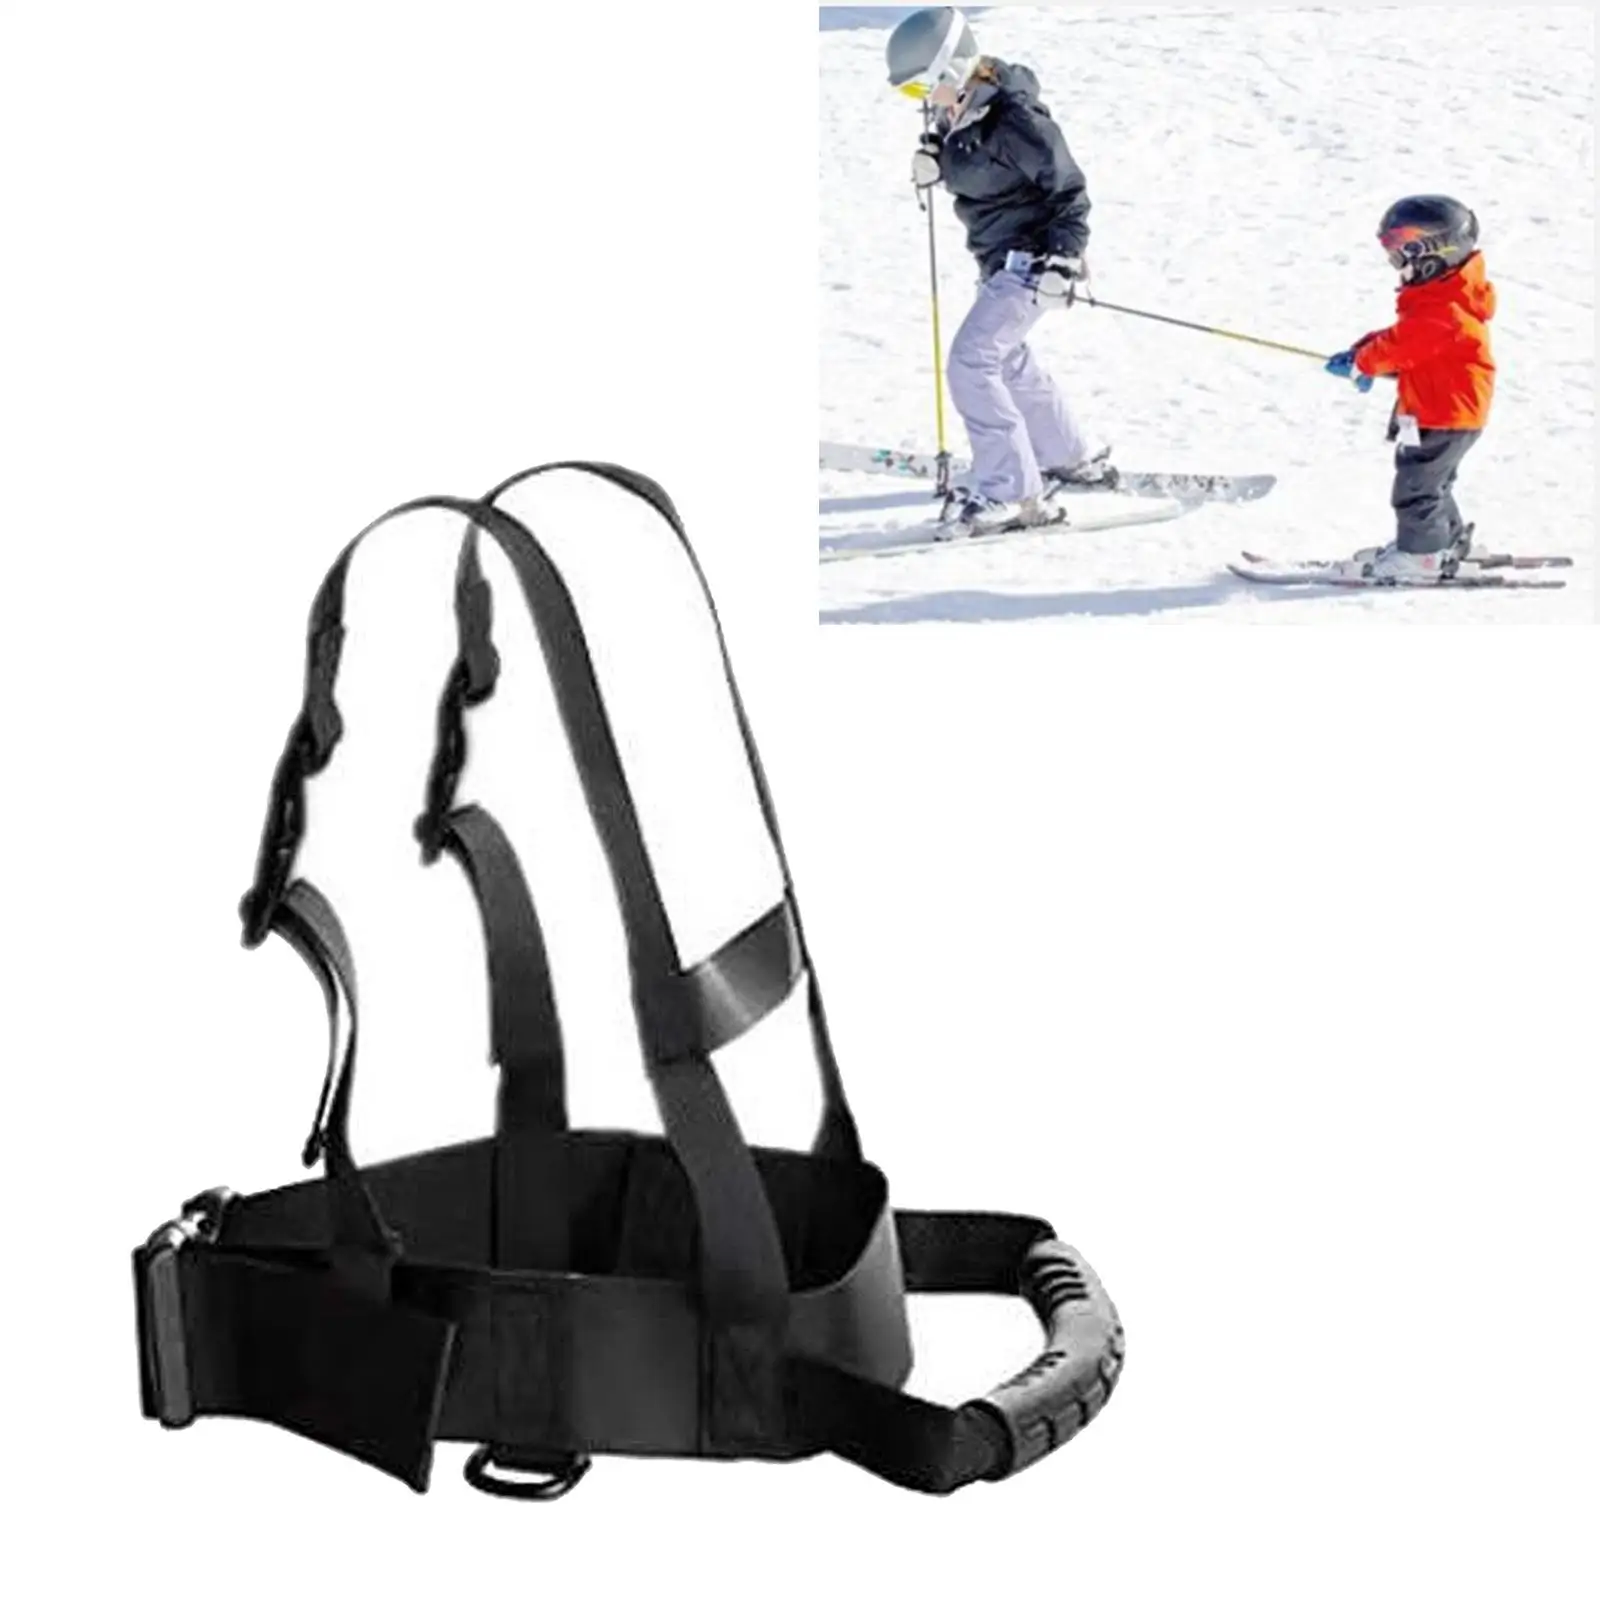 Kids Ski Shoulder Harness Leash for Kids Snowboard Training Winter Sports